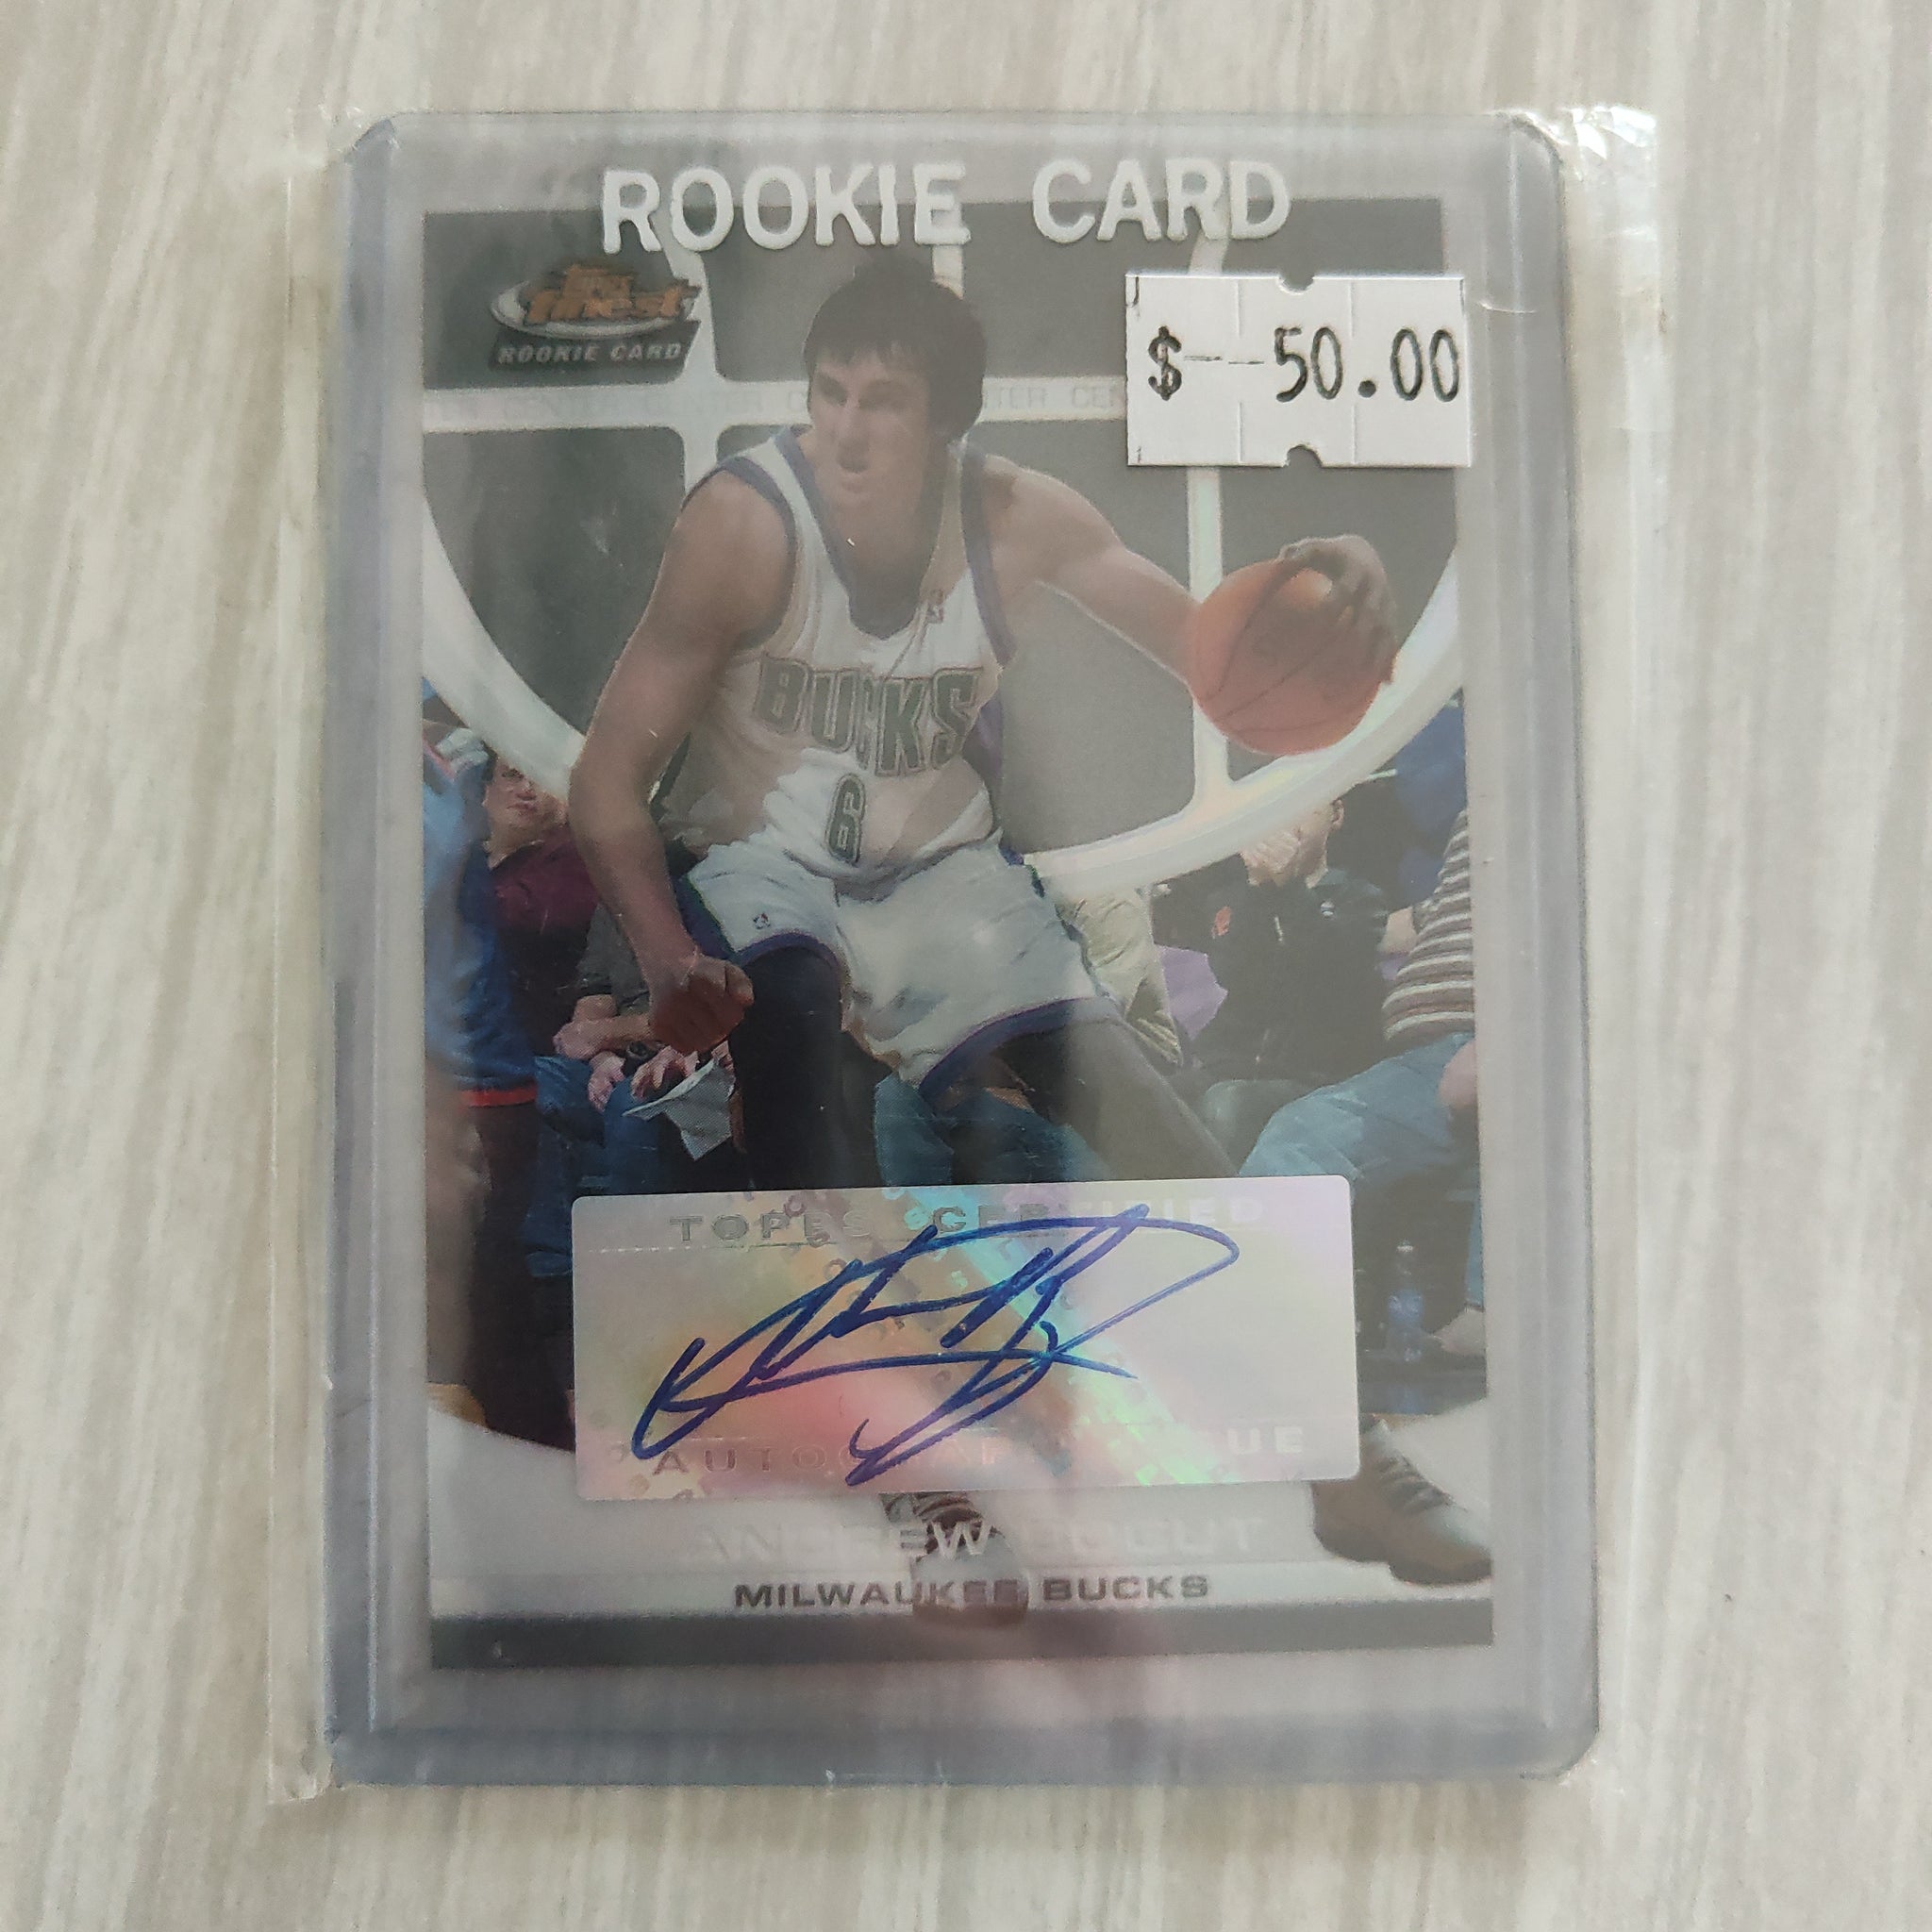 2006 Topps Finest Rookie Card Andrew Bogut Signature Card NBA Basketball Card 134/229